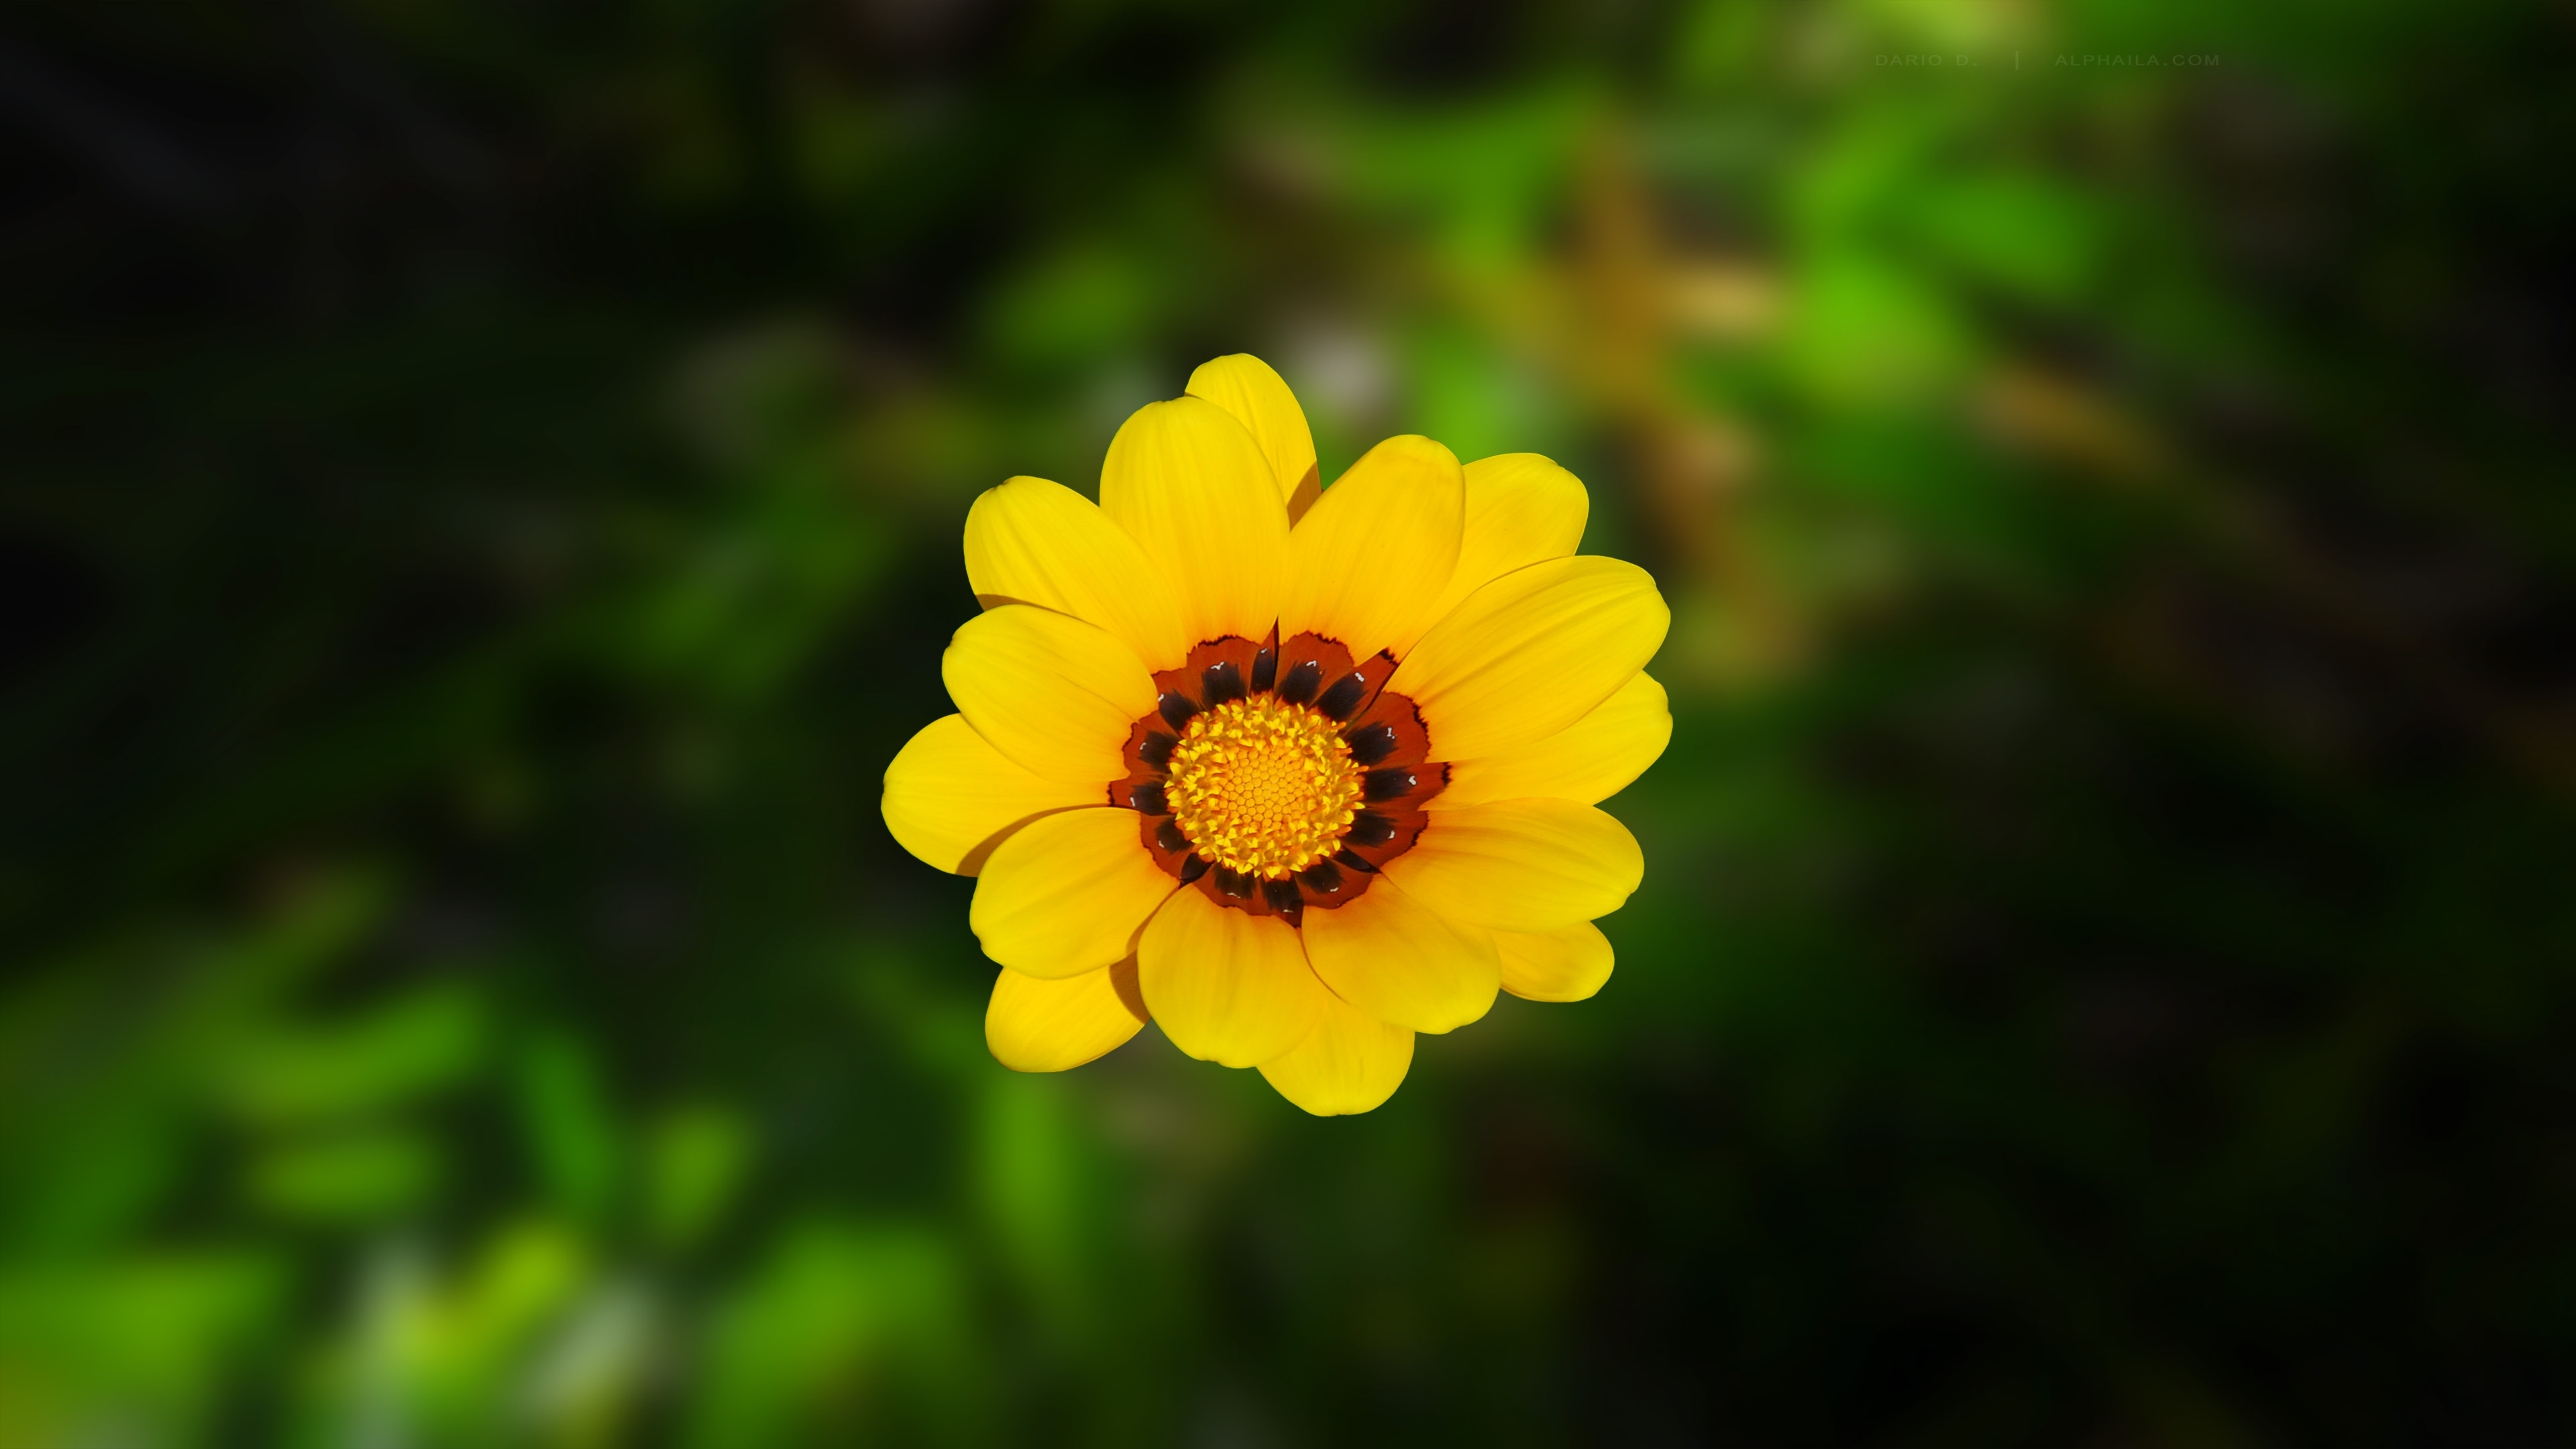 Flower 4k Ultra HD Wallpaper | Background Image | 3840x2160 | ID:556692